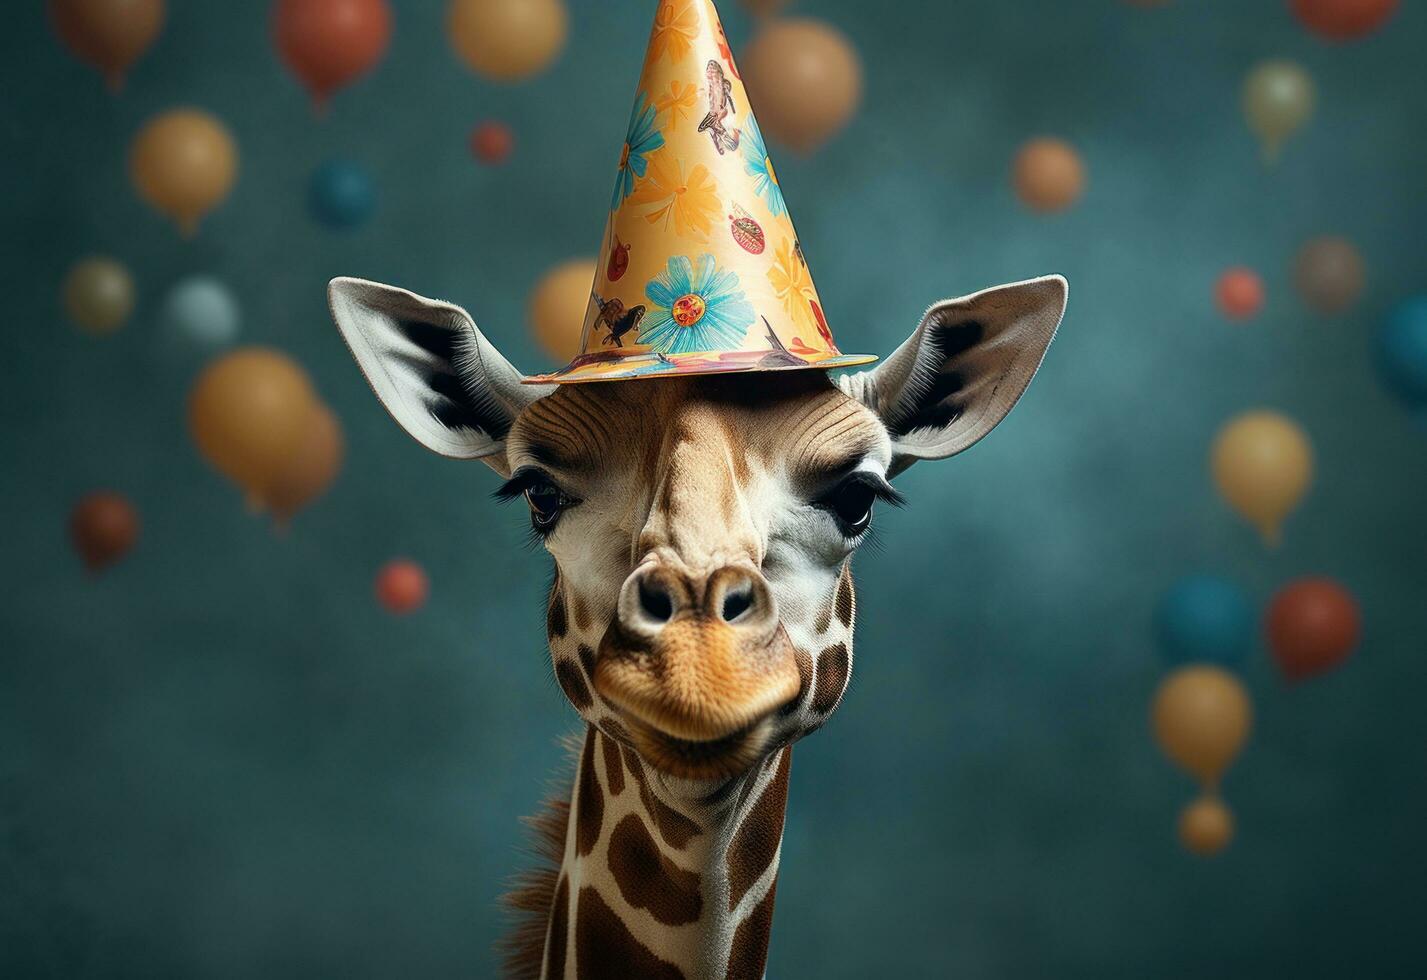 AI generated a giraffe in a birthday hat photo